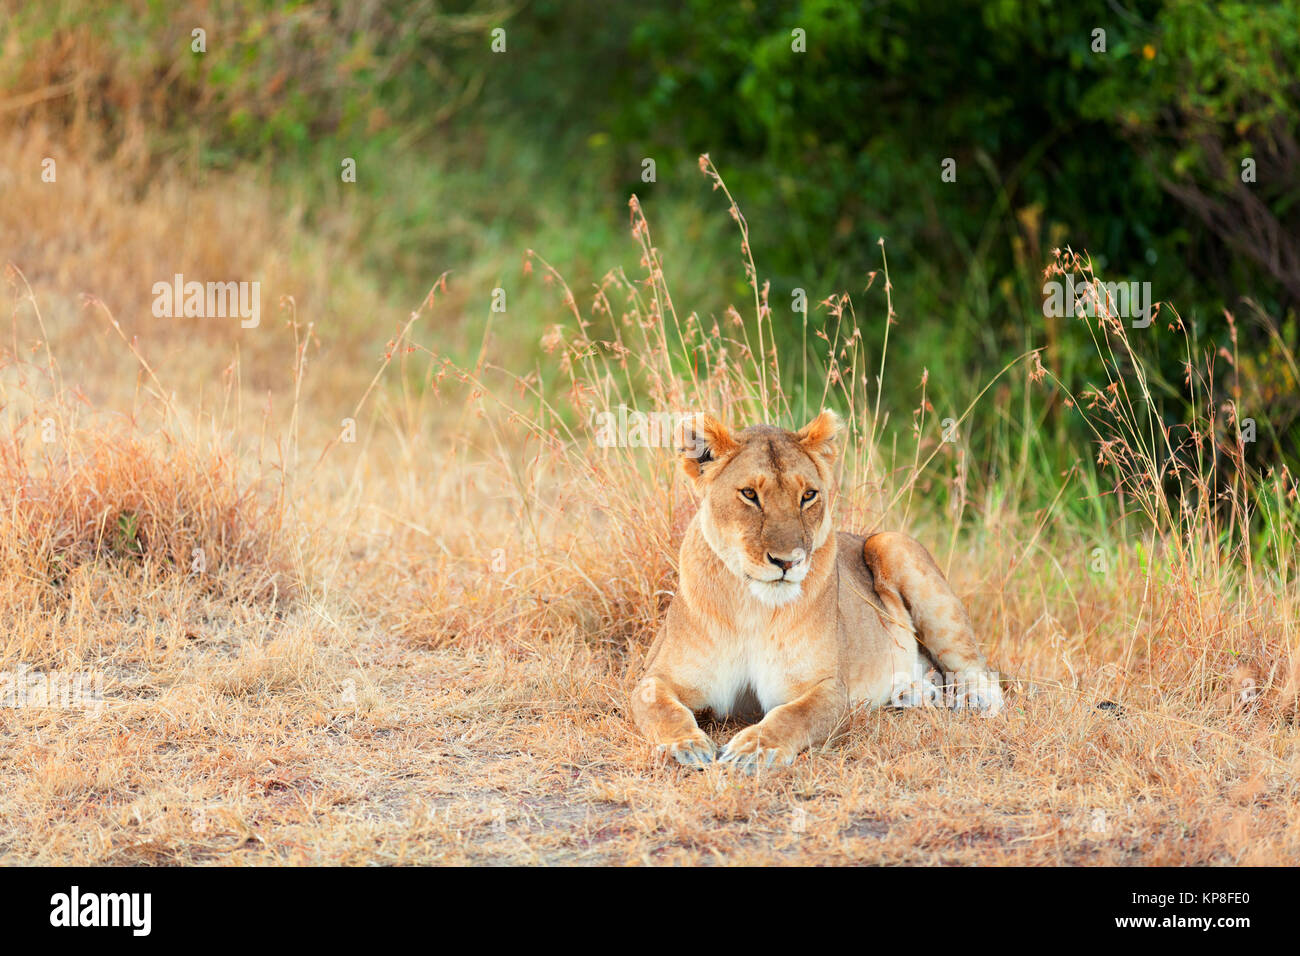 Female lion in Masai Mara,Female lion in Masai Mara,Female lion in Masai Mara,Female lion in Masai Mara Stock Photo